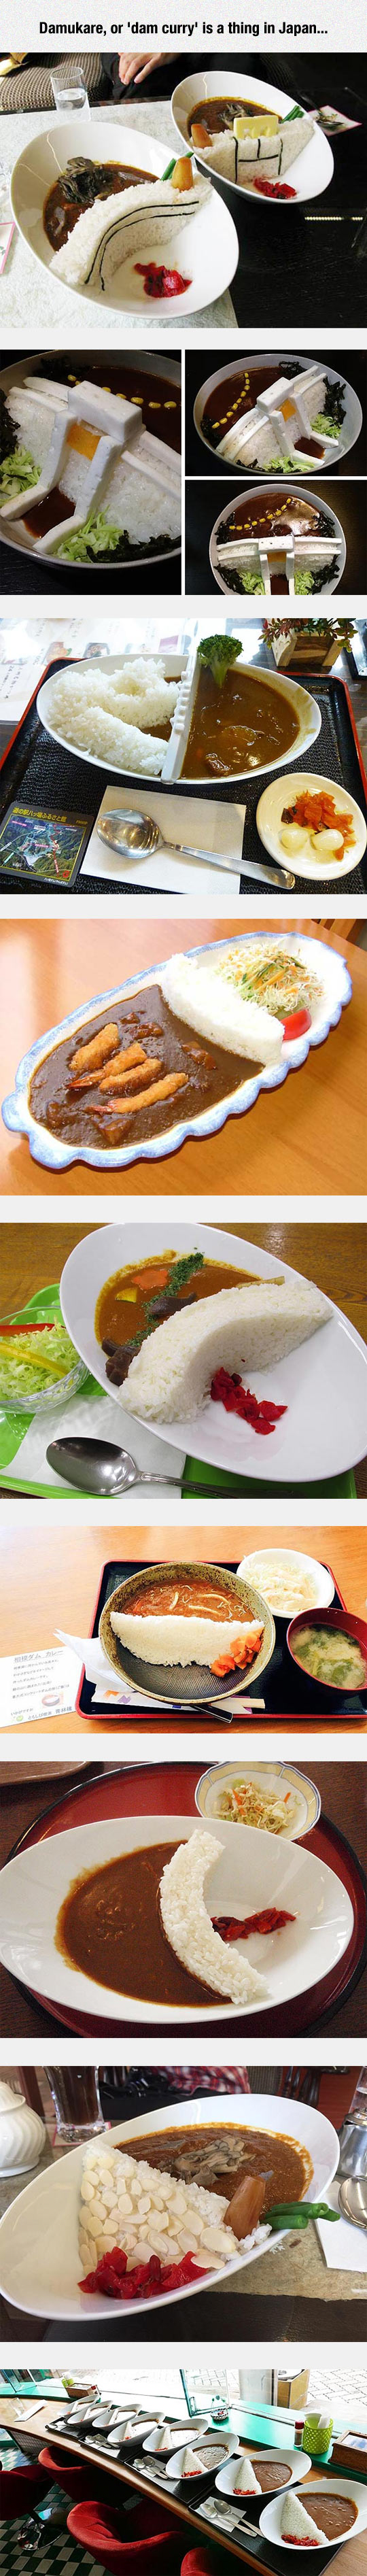 funny-rice-soup-japan-vegetables